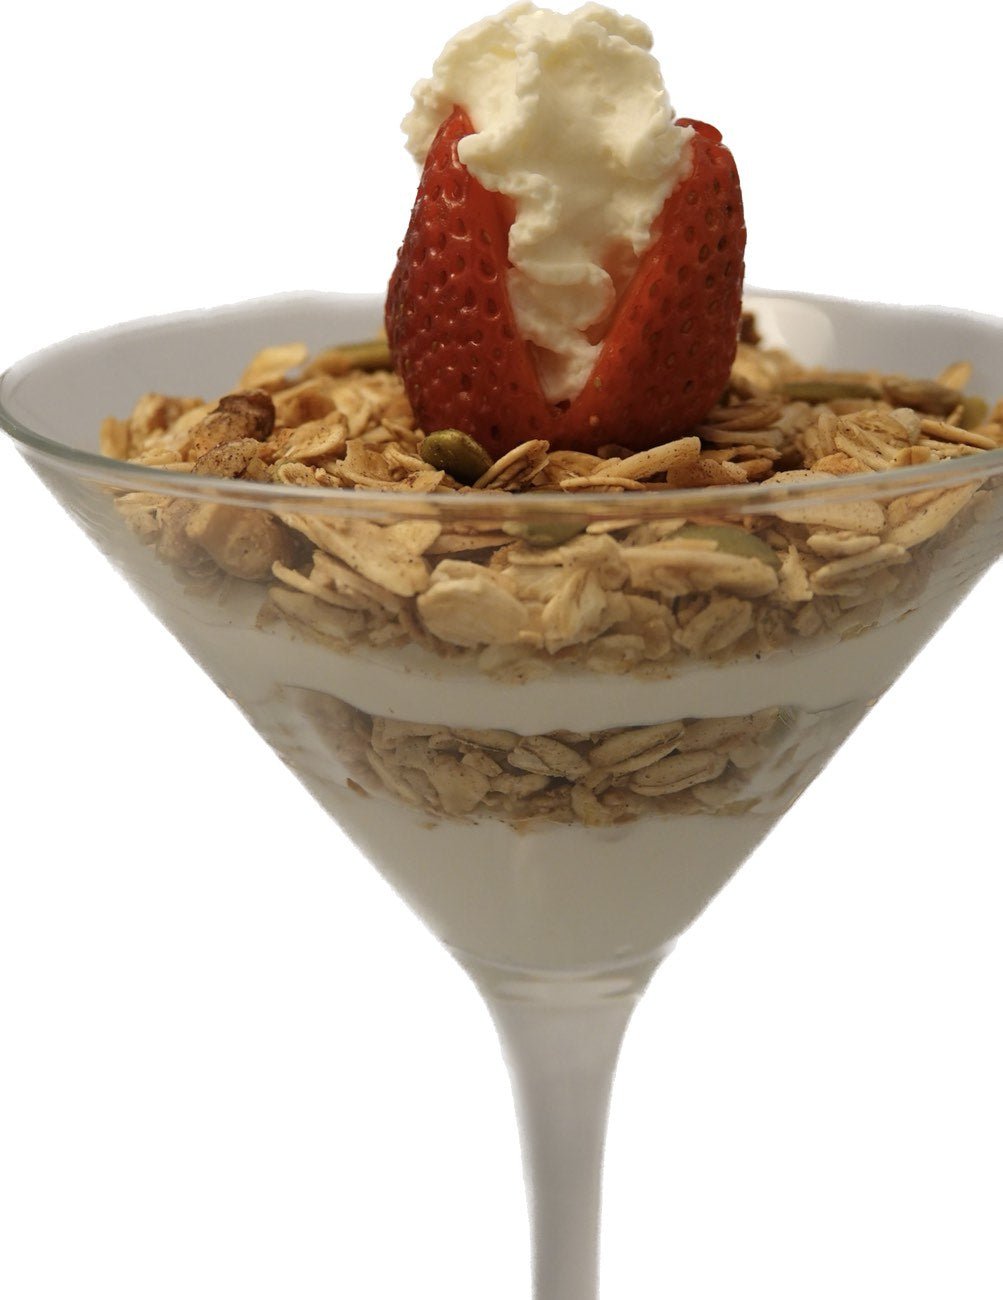 V shaped tall glass holding layers of yogurt and Granolala 